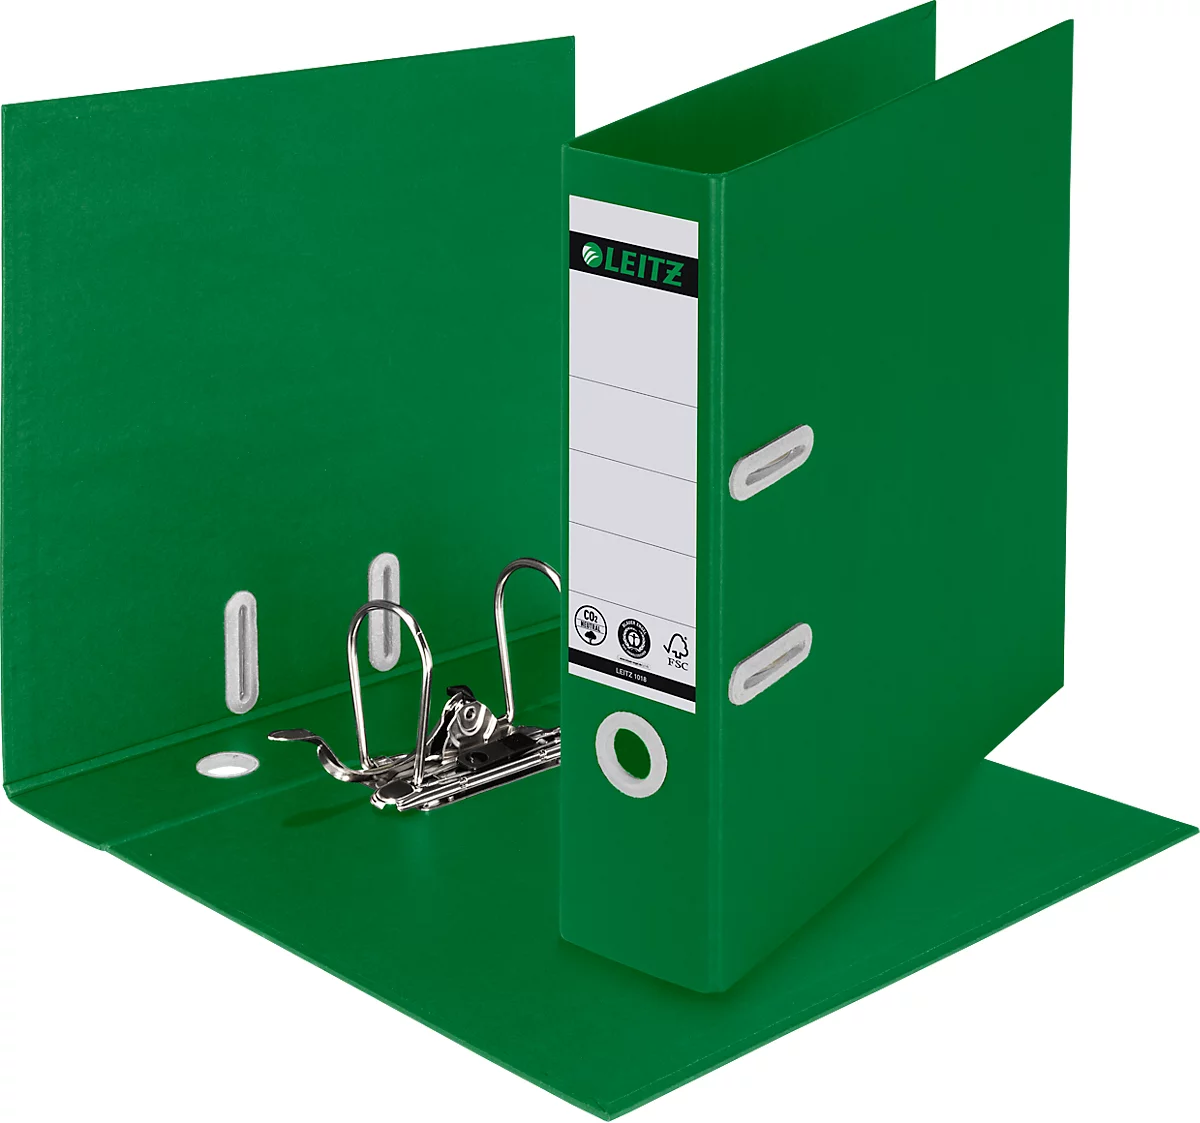 LEITZ® Ordner Recycle, DIN A4, Rückenbreite 80 mm, 180°-Hebelmechanik, Rückenschild & Griffloch, zu 100 % recycelbar, grün